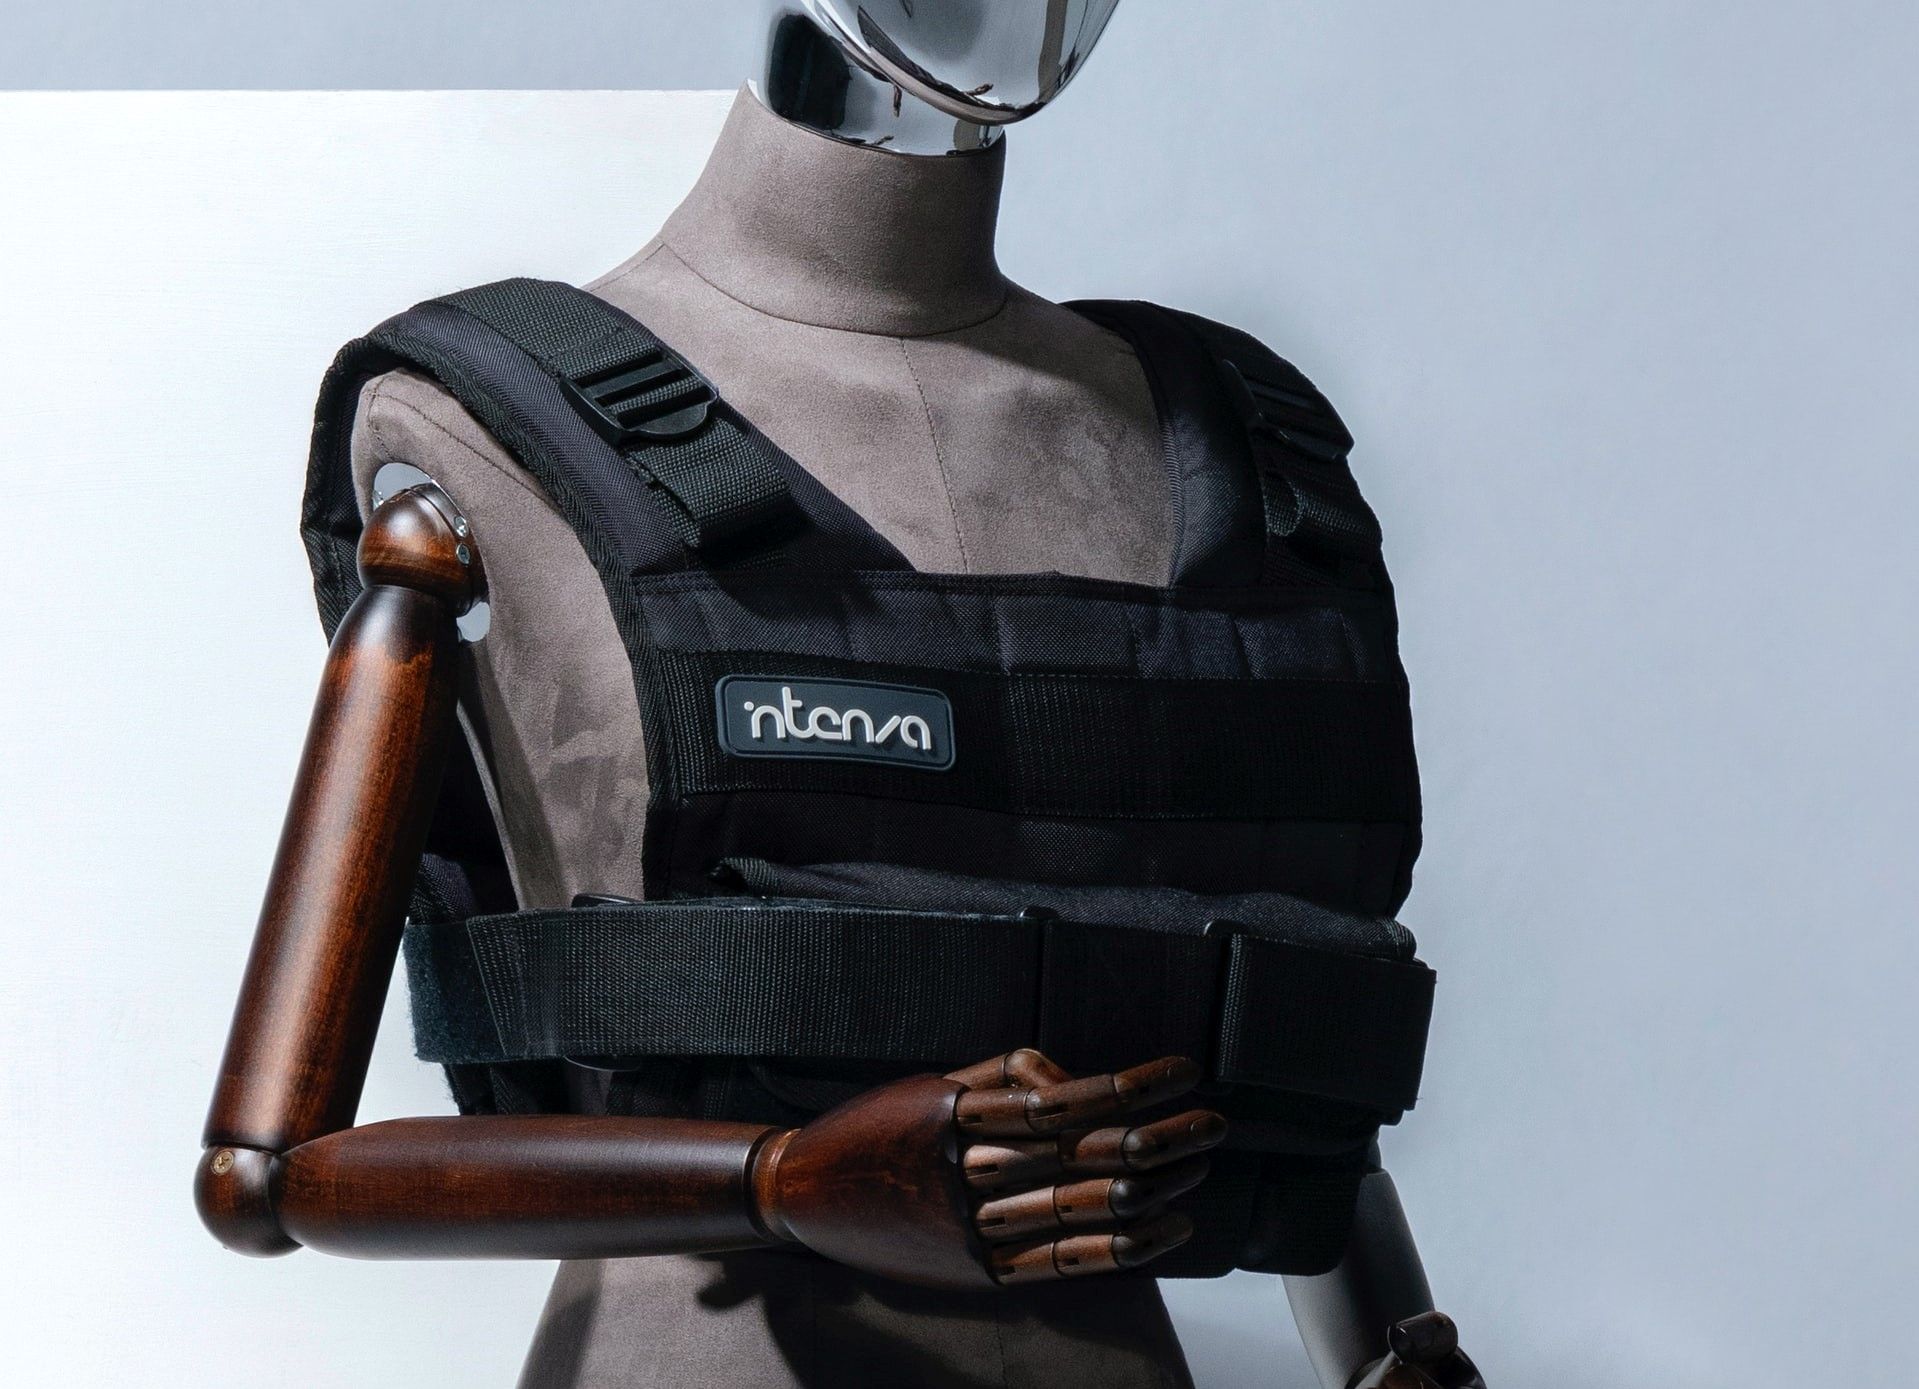 nano tech protection vest –